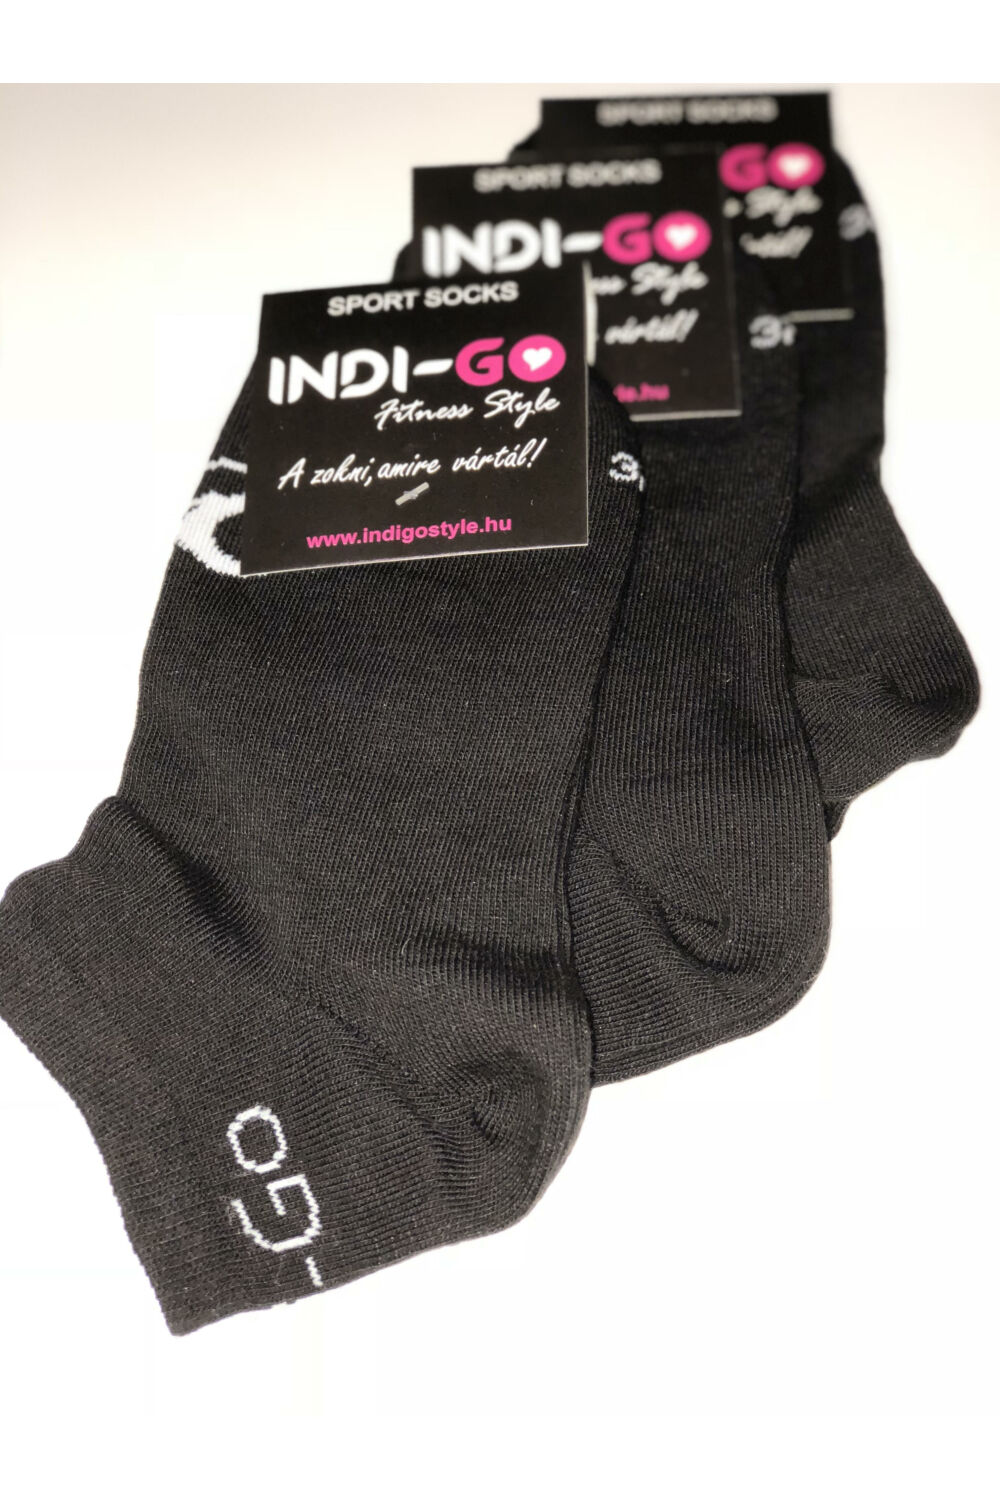 Indi-Go Indigo Sport zokni, fekete-pink